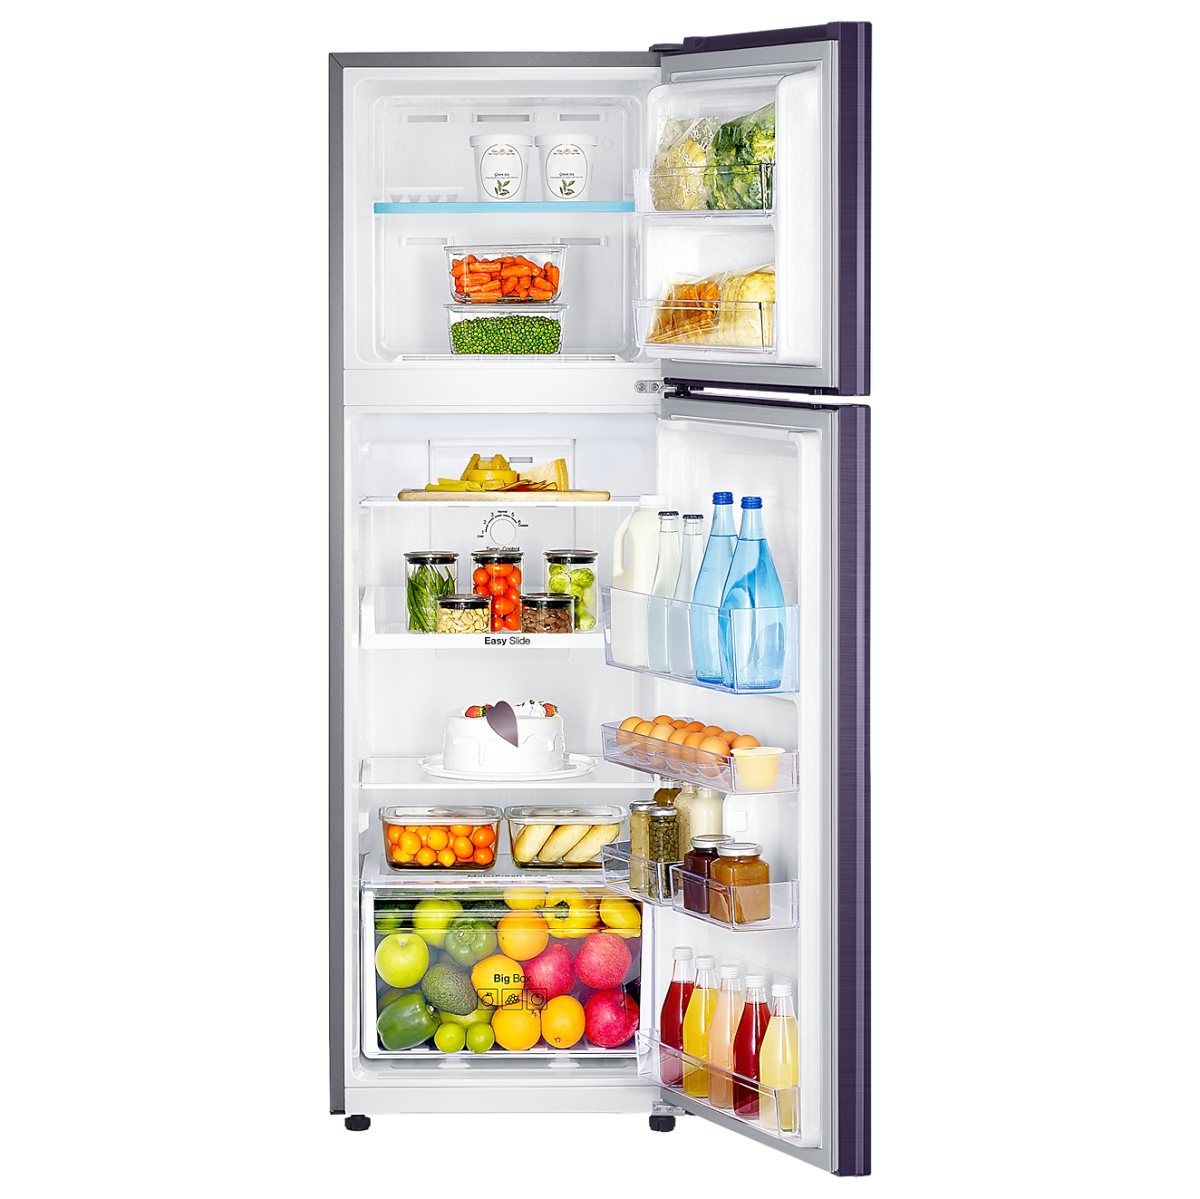 SAMSUNG 275 Liter Refrigerator Mono Cooling with Digital Inverter Technology RT29HAR9DUT/D3 , Best Refrigerators of Year, Top-rated Refrigerators, Refrigerator Reviews, Refrigerator Comparison, Buying a Refrigerator Guide, Refrigerator Deals and Offers